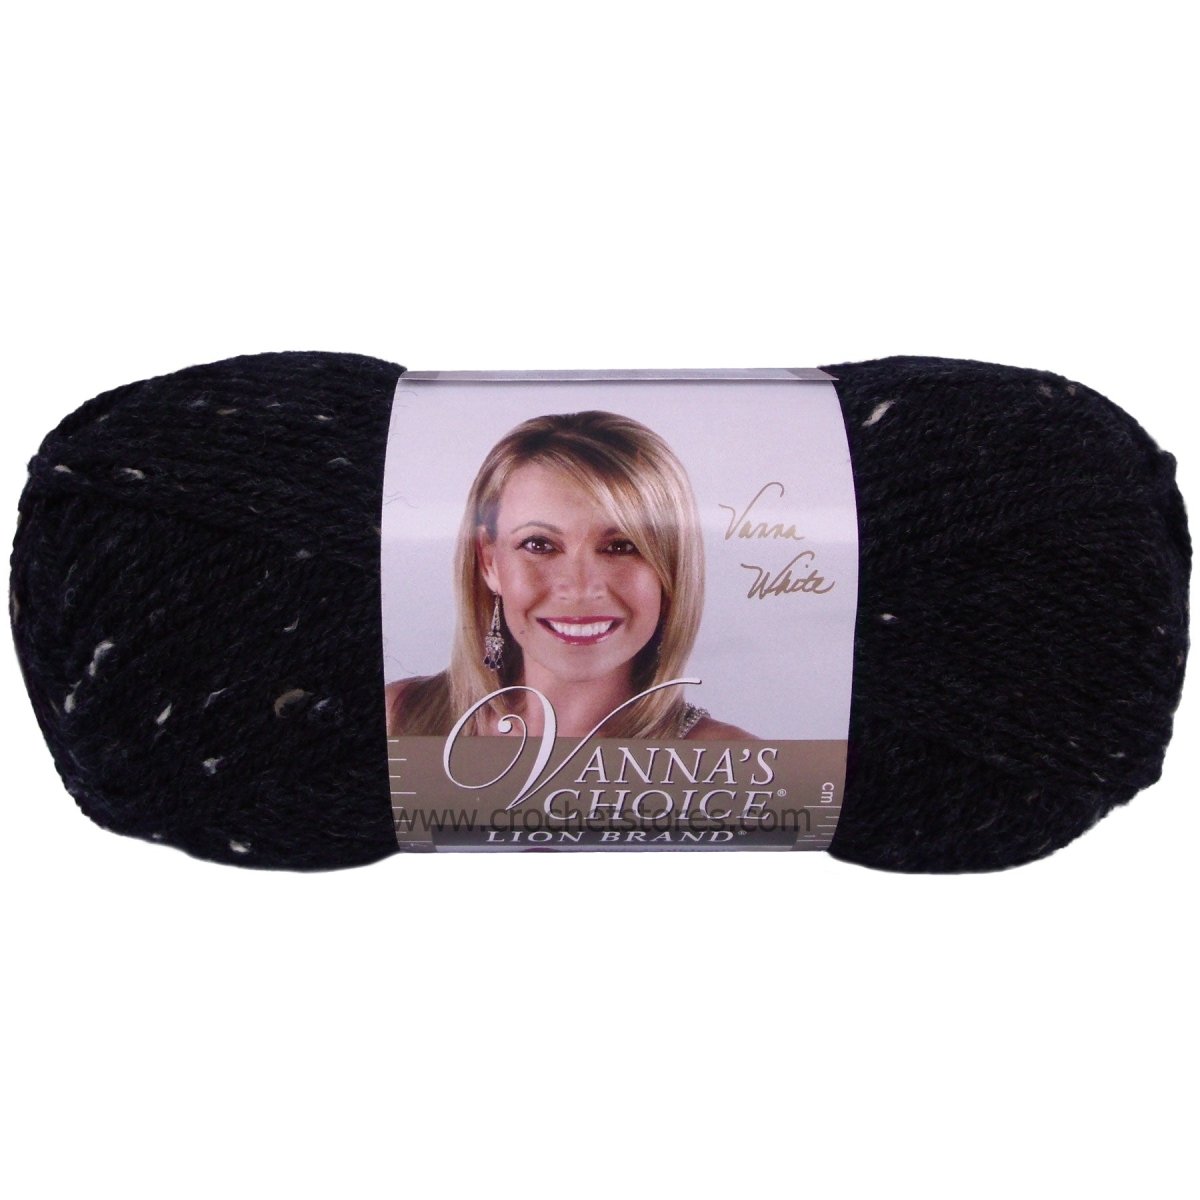 VANNAS CHOICE - Crochetstores860-406